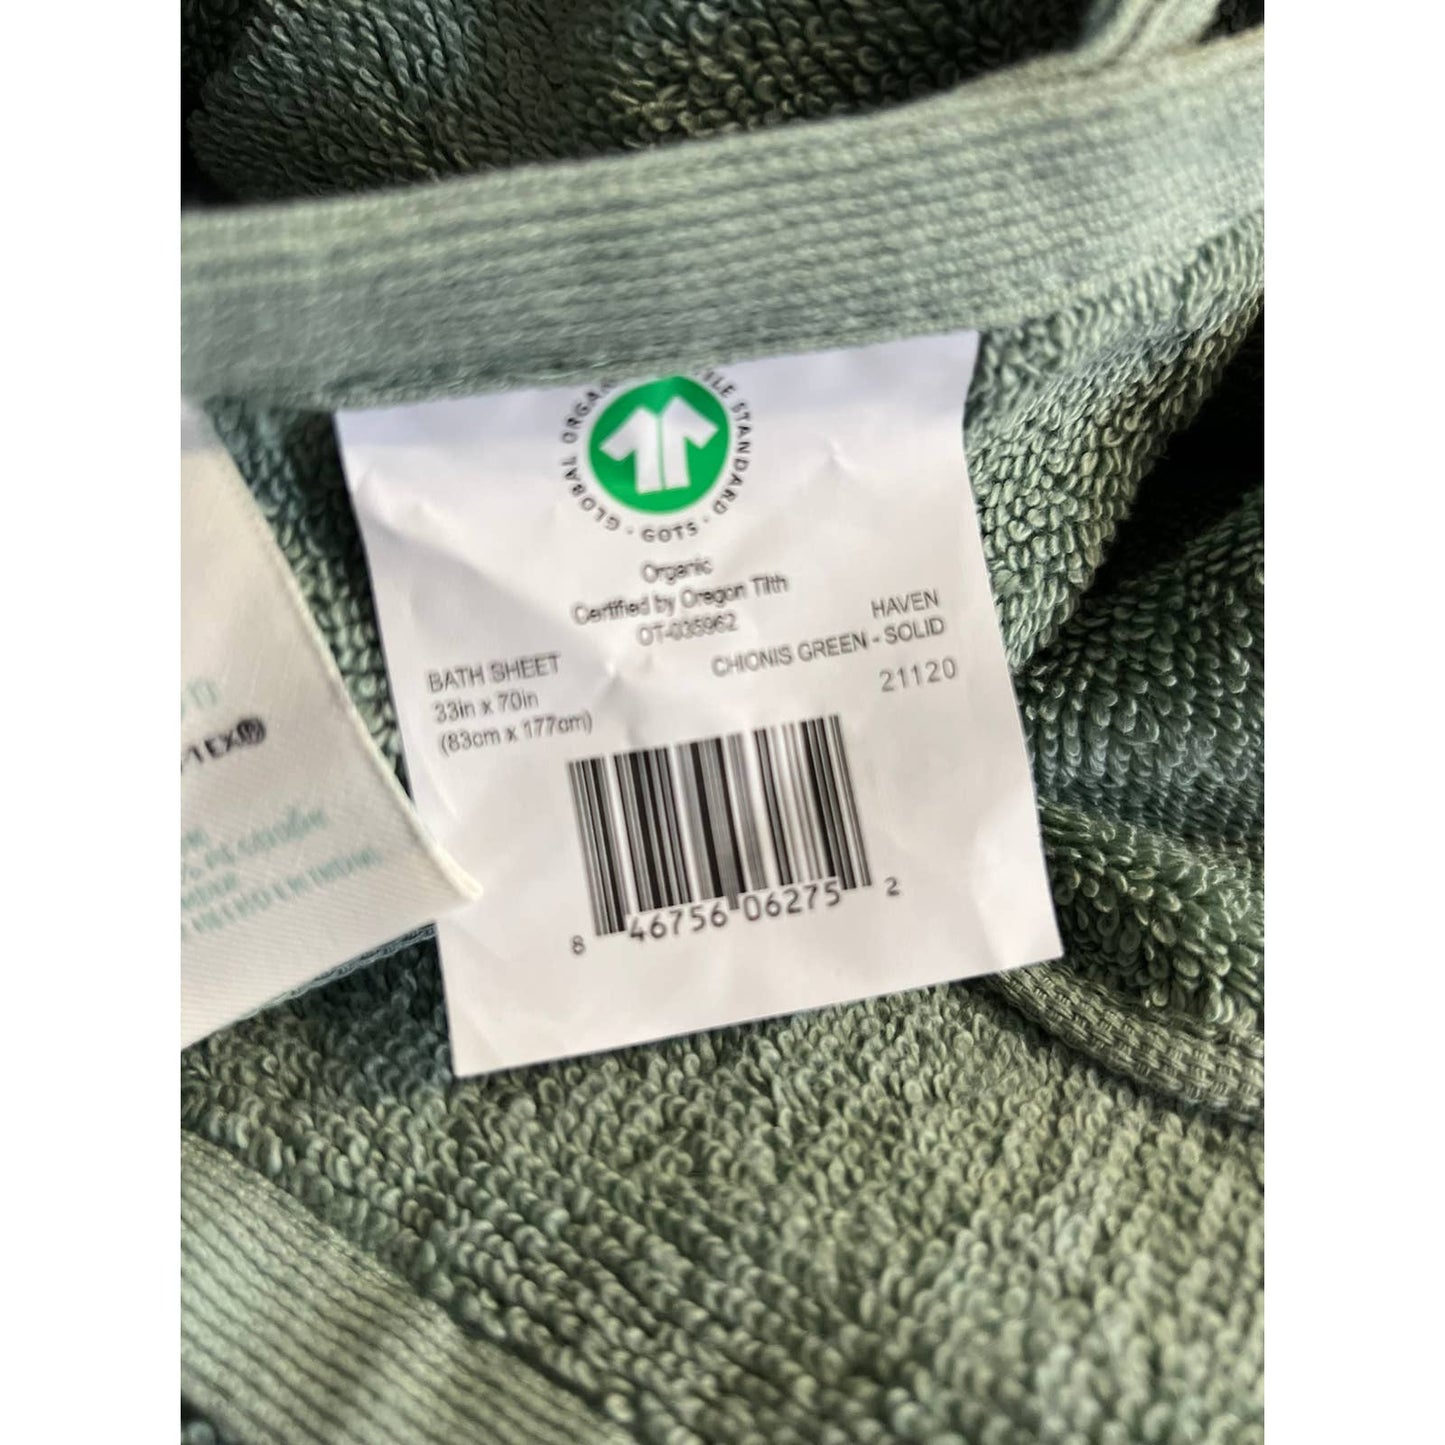 2 TOWELS HAVEN ORGANIC COTTON BATH SHEET CHIONIS GREEN NWT